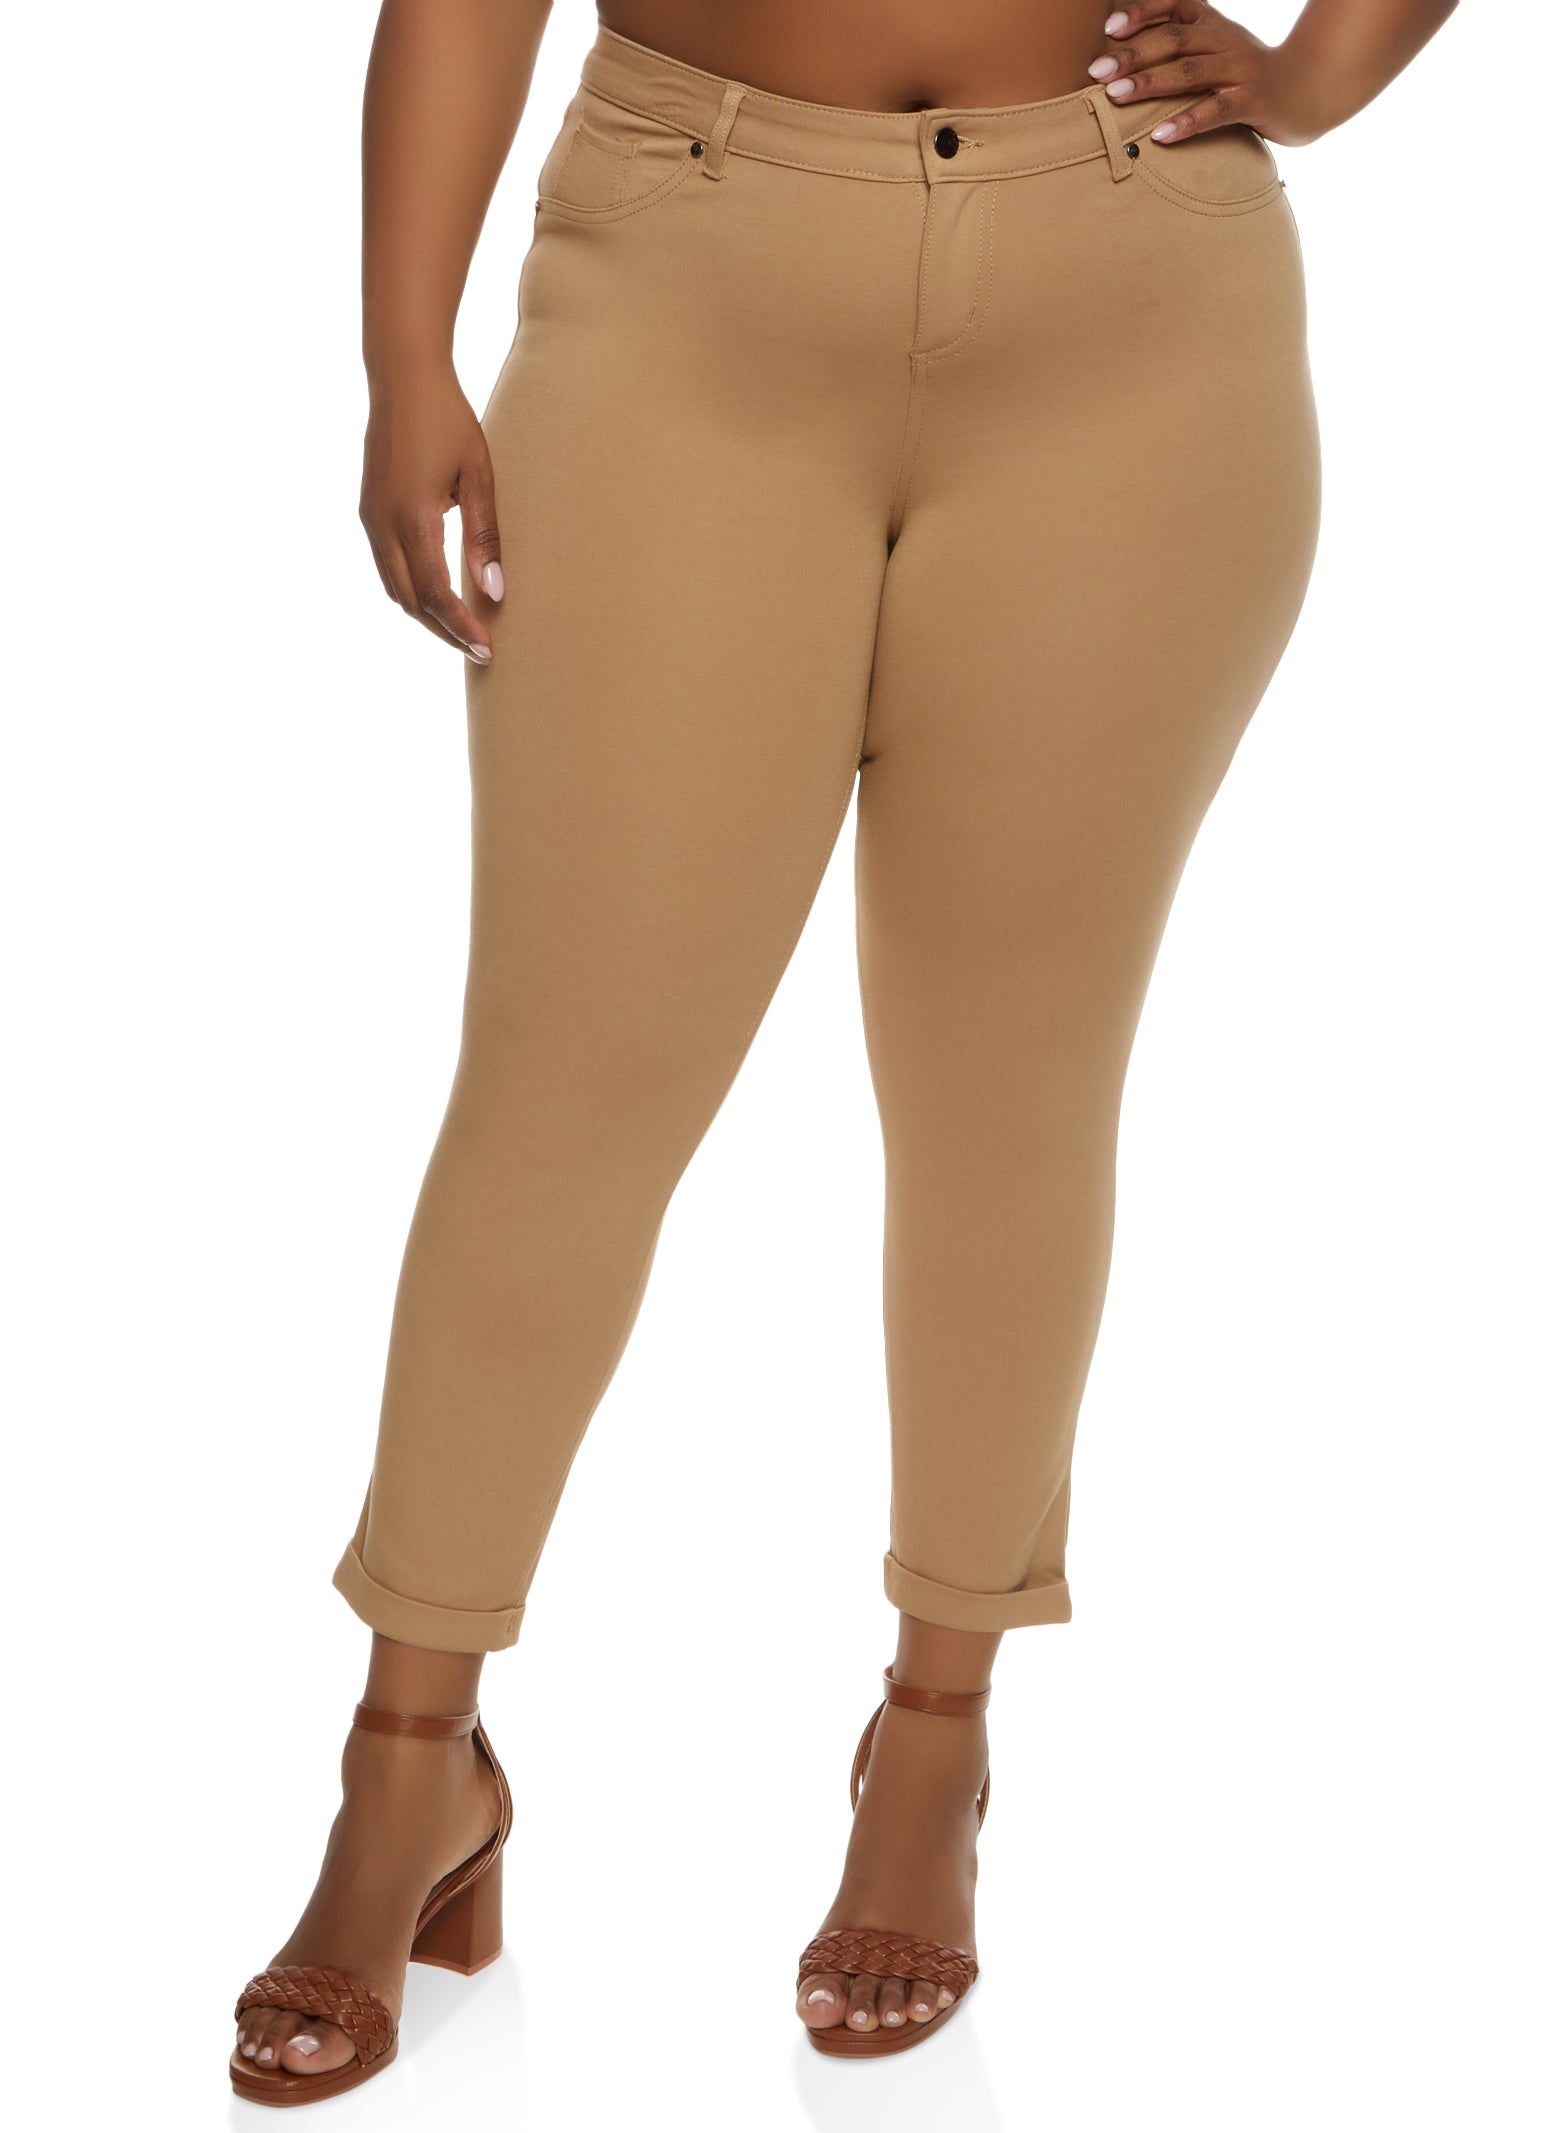 Rainbow Shops Womens Plus Size Ponte Fixed Cuff Pants, Khaki, Size